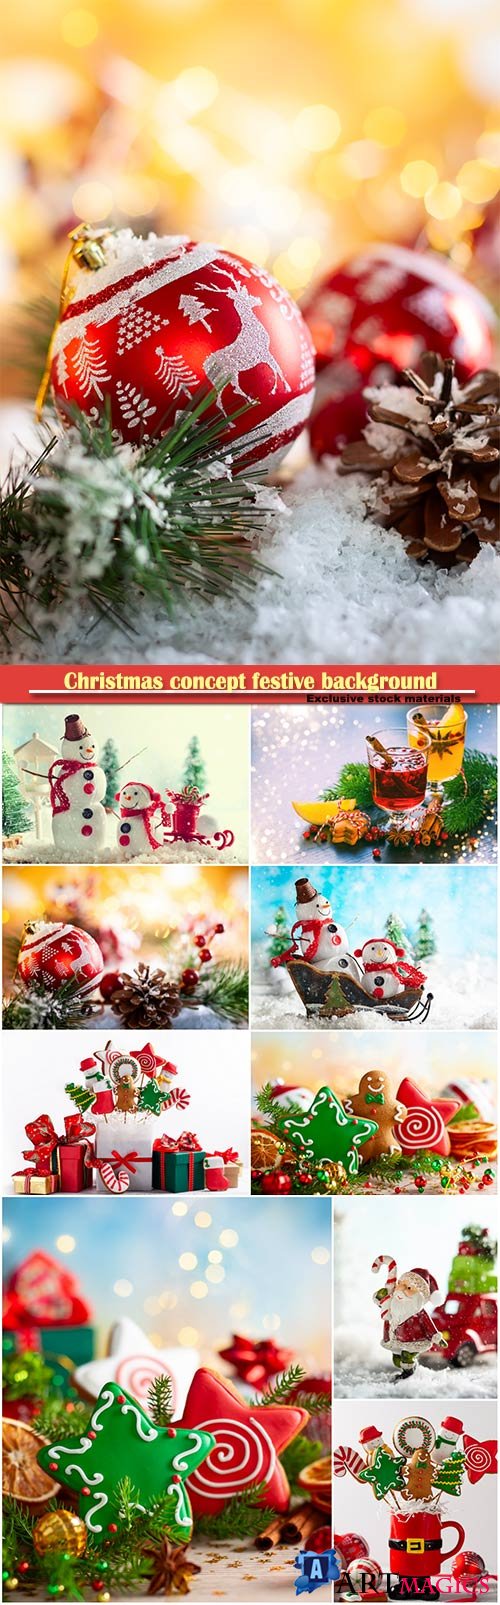 Christmas concept festive background